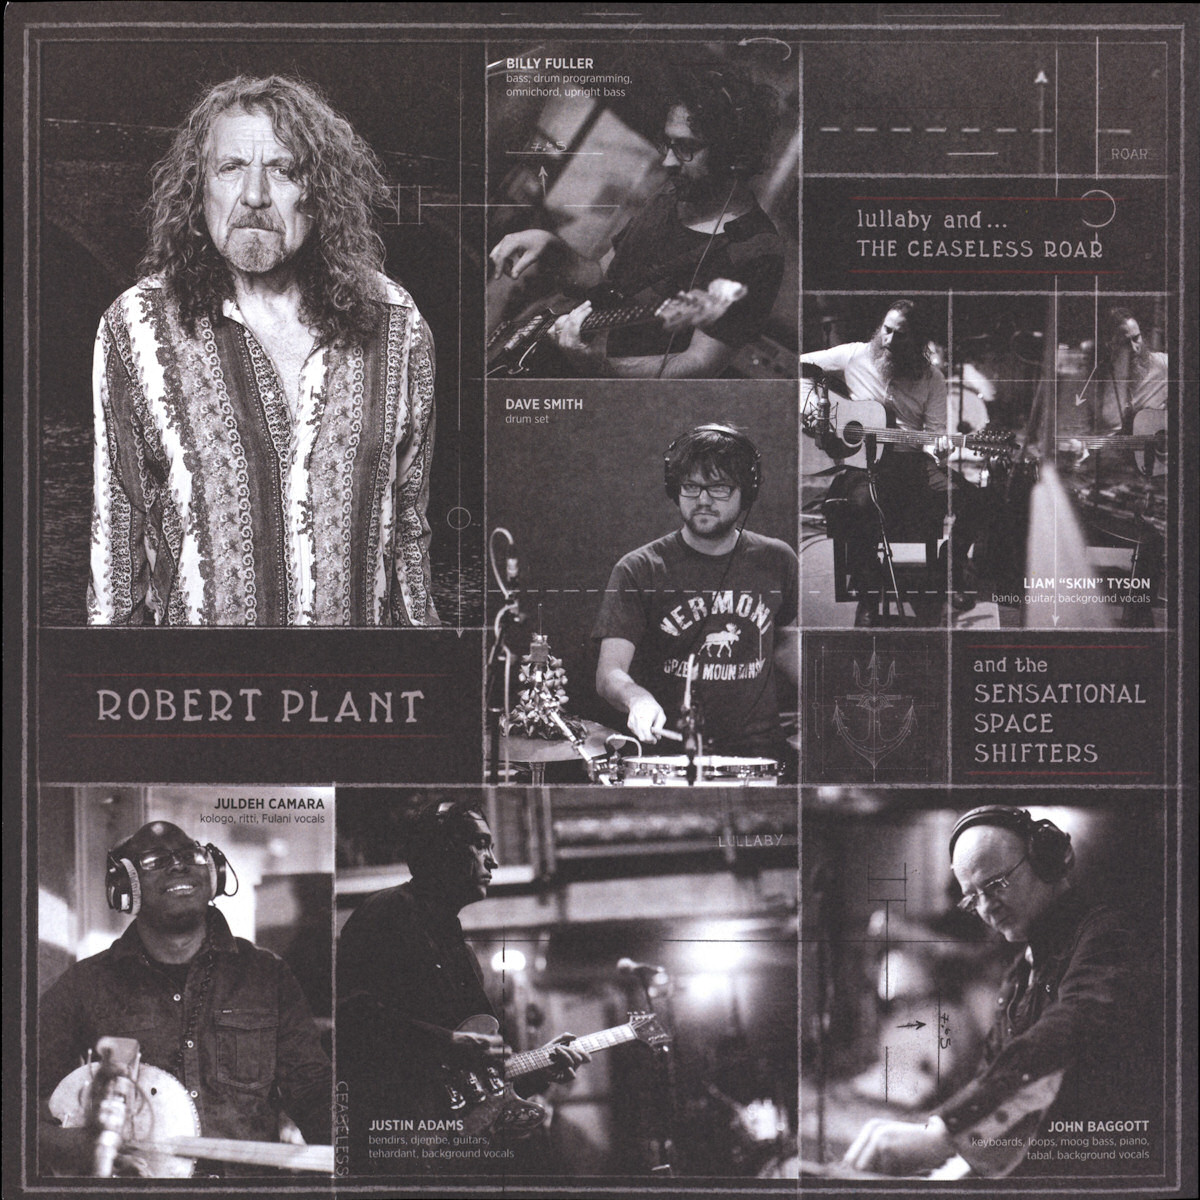 Плант альбомы. Robert Plant Lullaby and the ceaseless Roar 2014. Robert Plant and the Sensational Space Shifters - "Lullaby and... The ceaseless Roar" (2014). Robert Plant 2014.